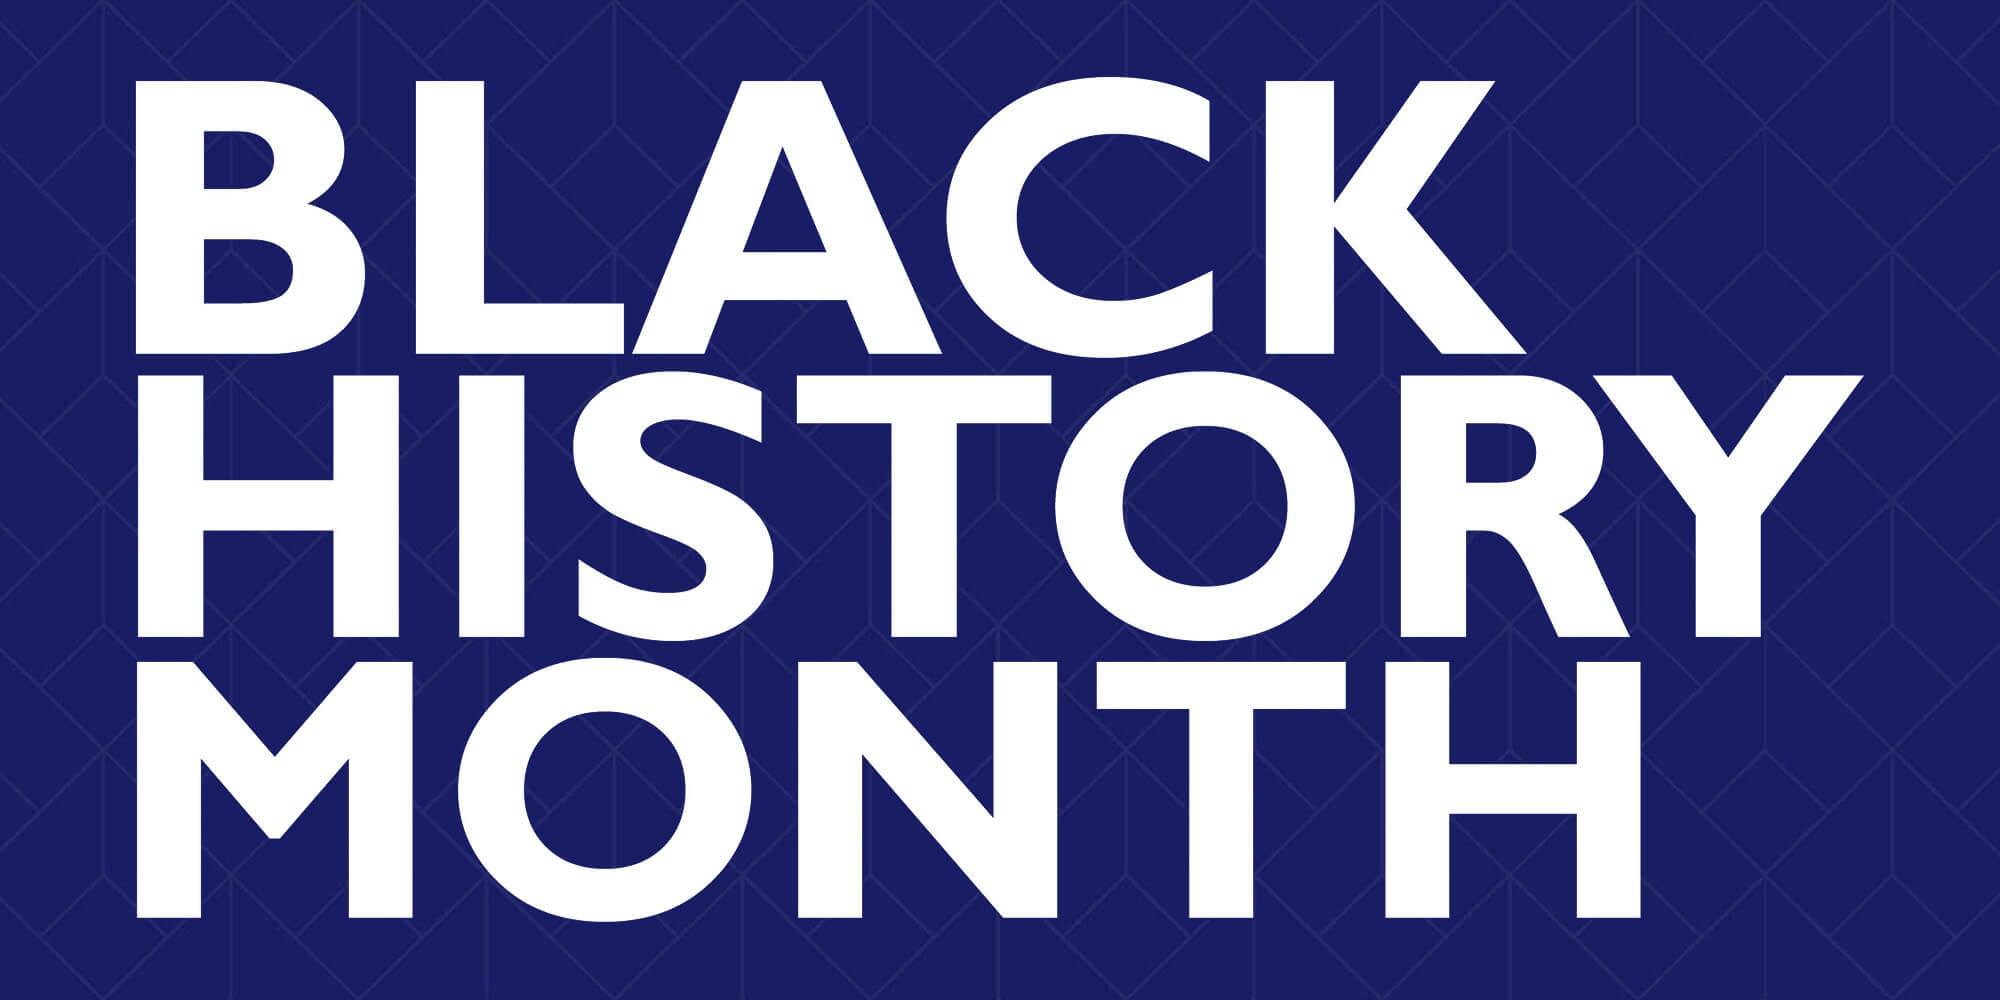 MGT spotlights its Black leadership during Black history month